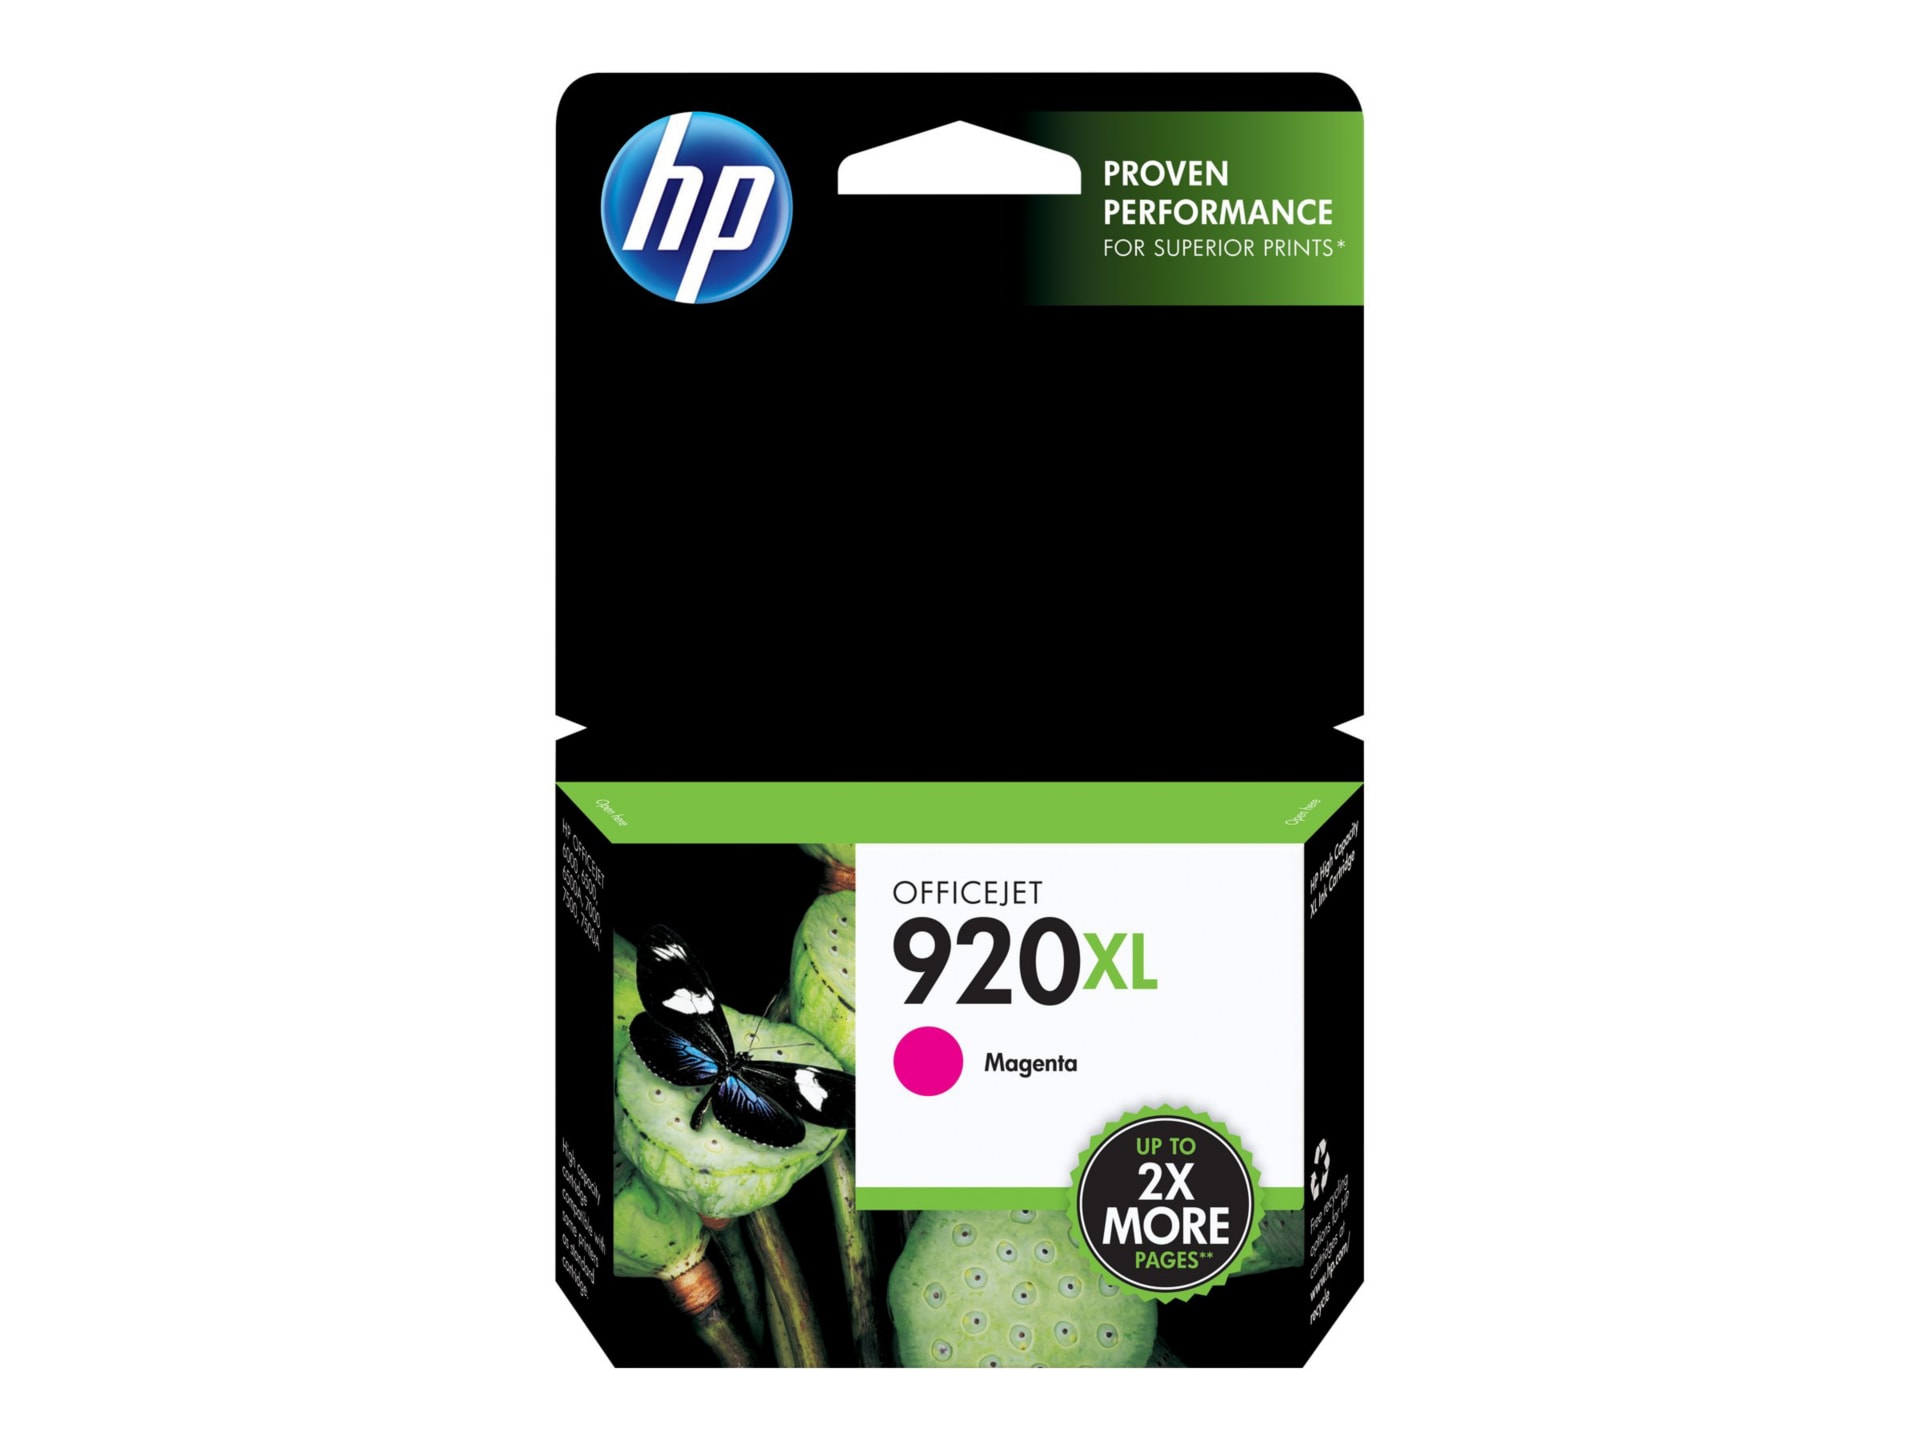 HP 920XL Original High Yield Inkjet Ink Cartridge - Magenta - 1 / Pack